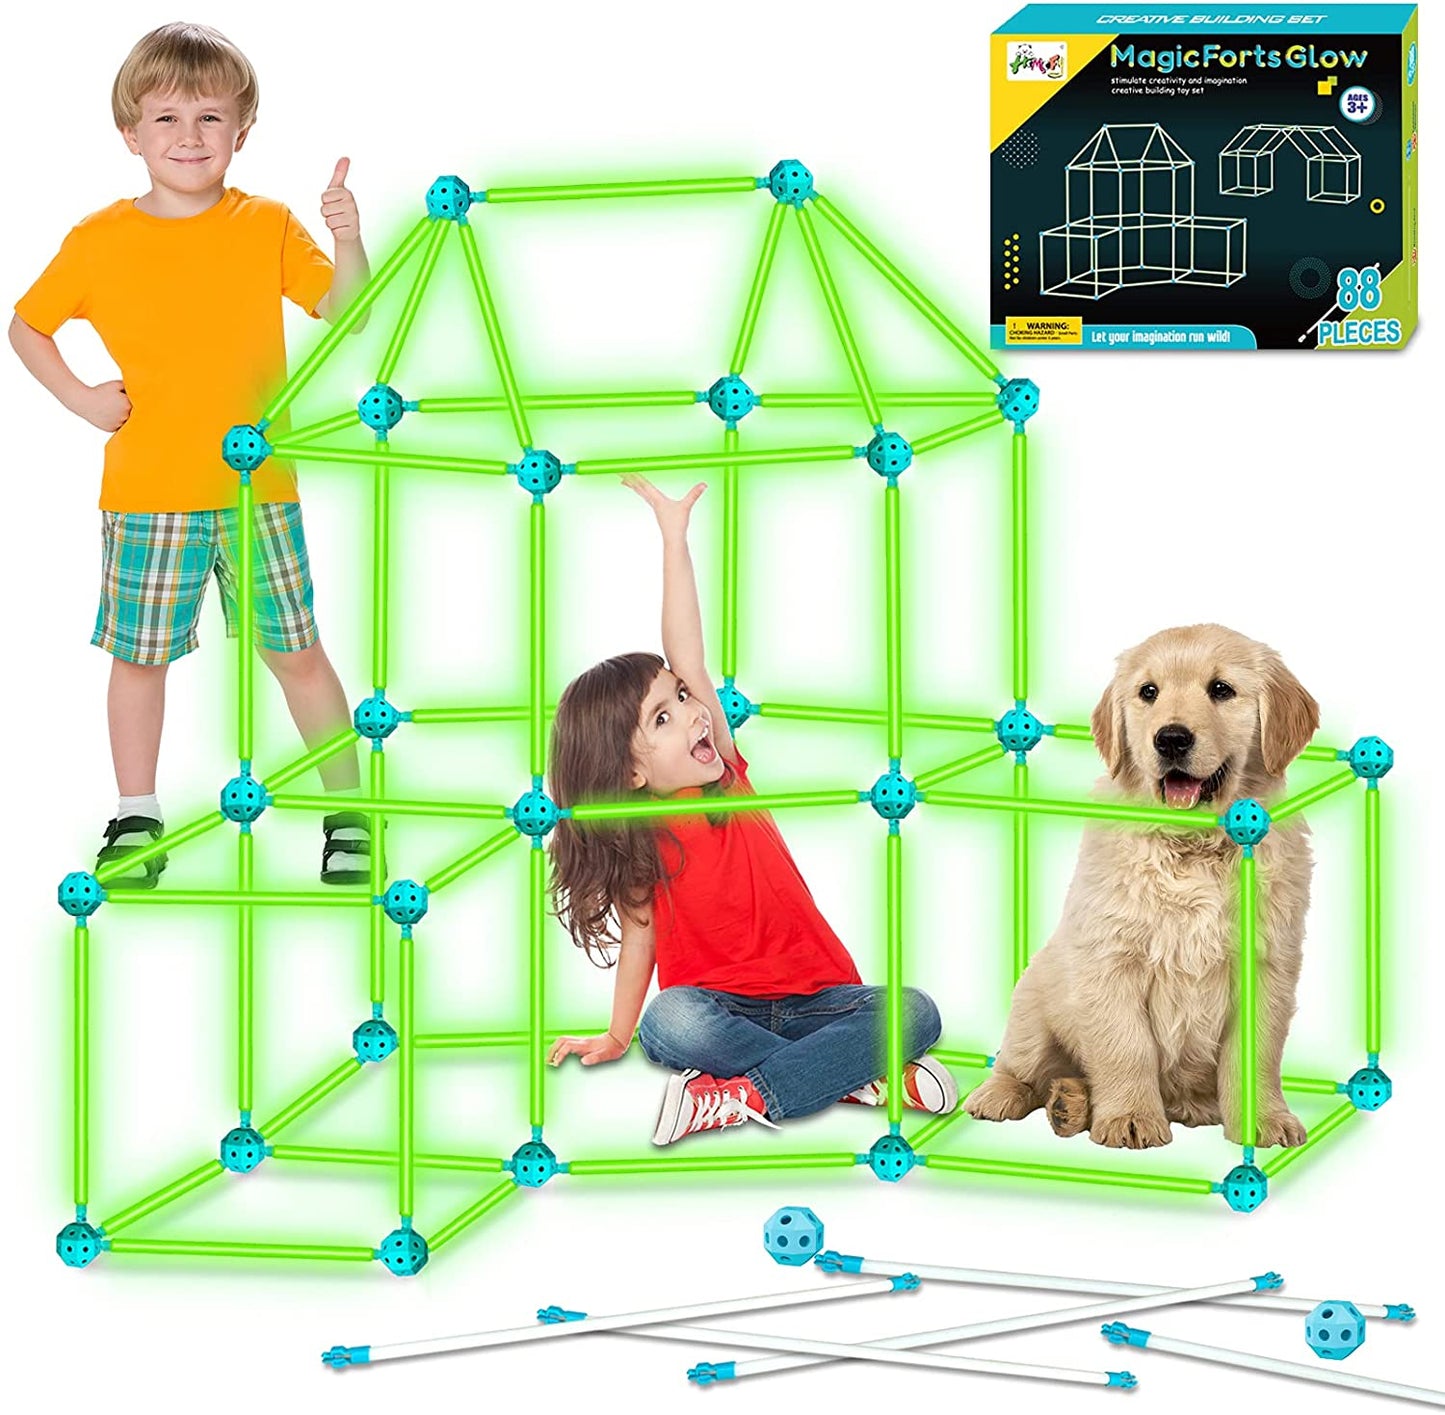 Peachy® Kids Luminous Fort Building Kit for Indoor & Outdoor